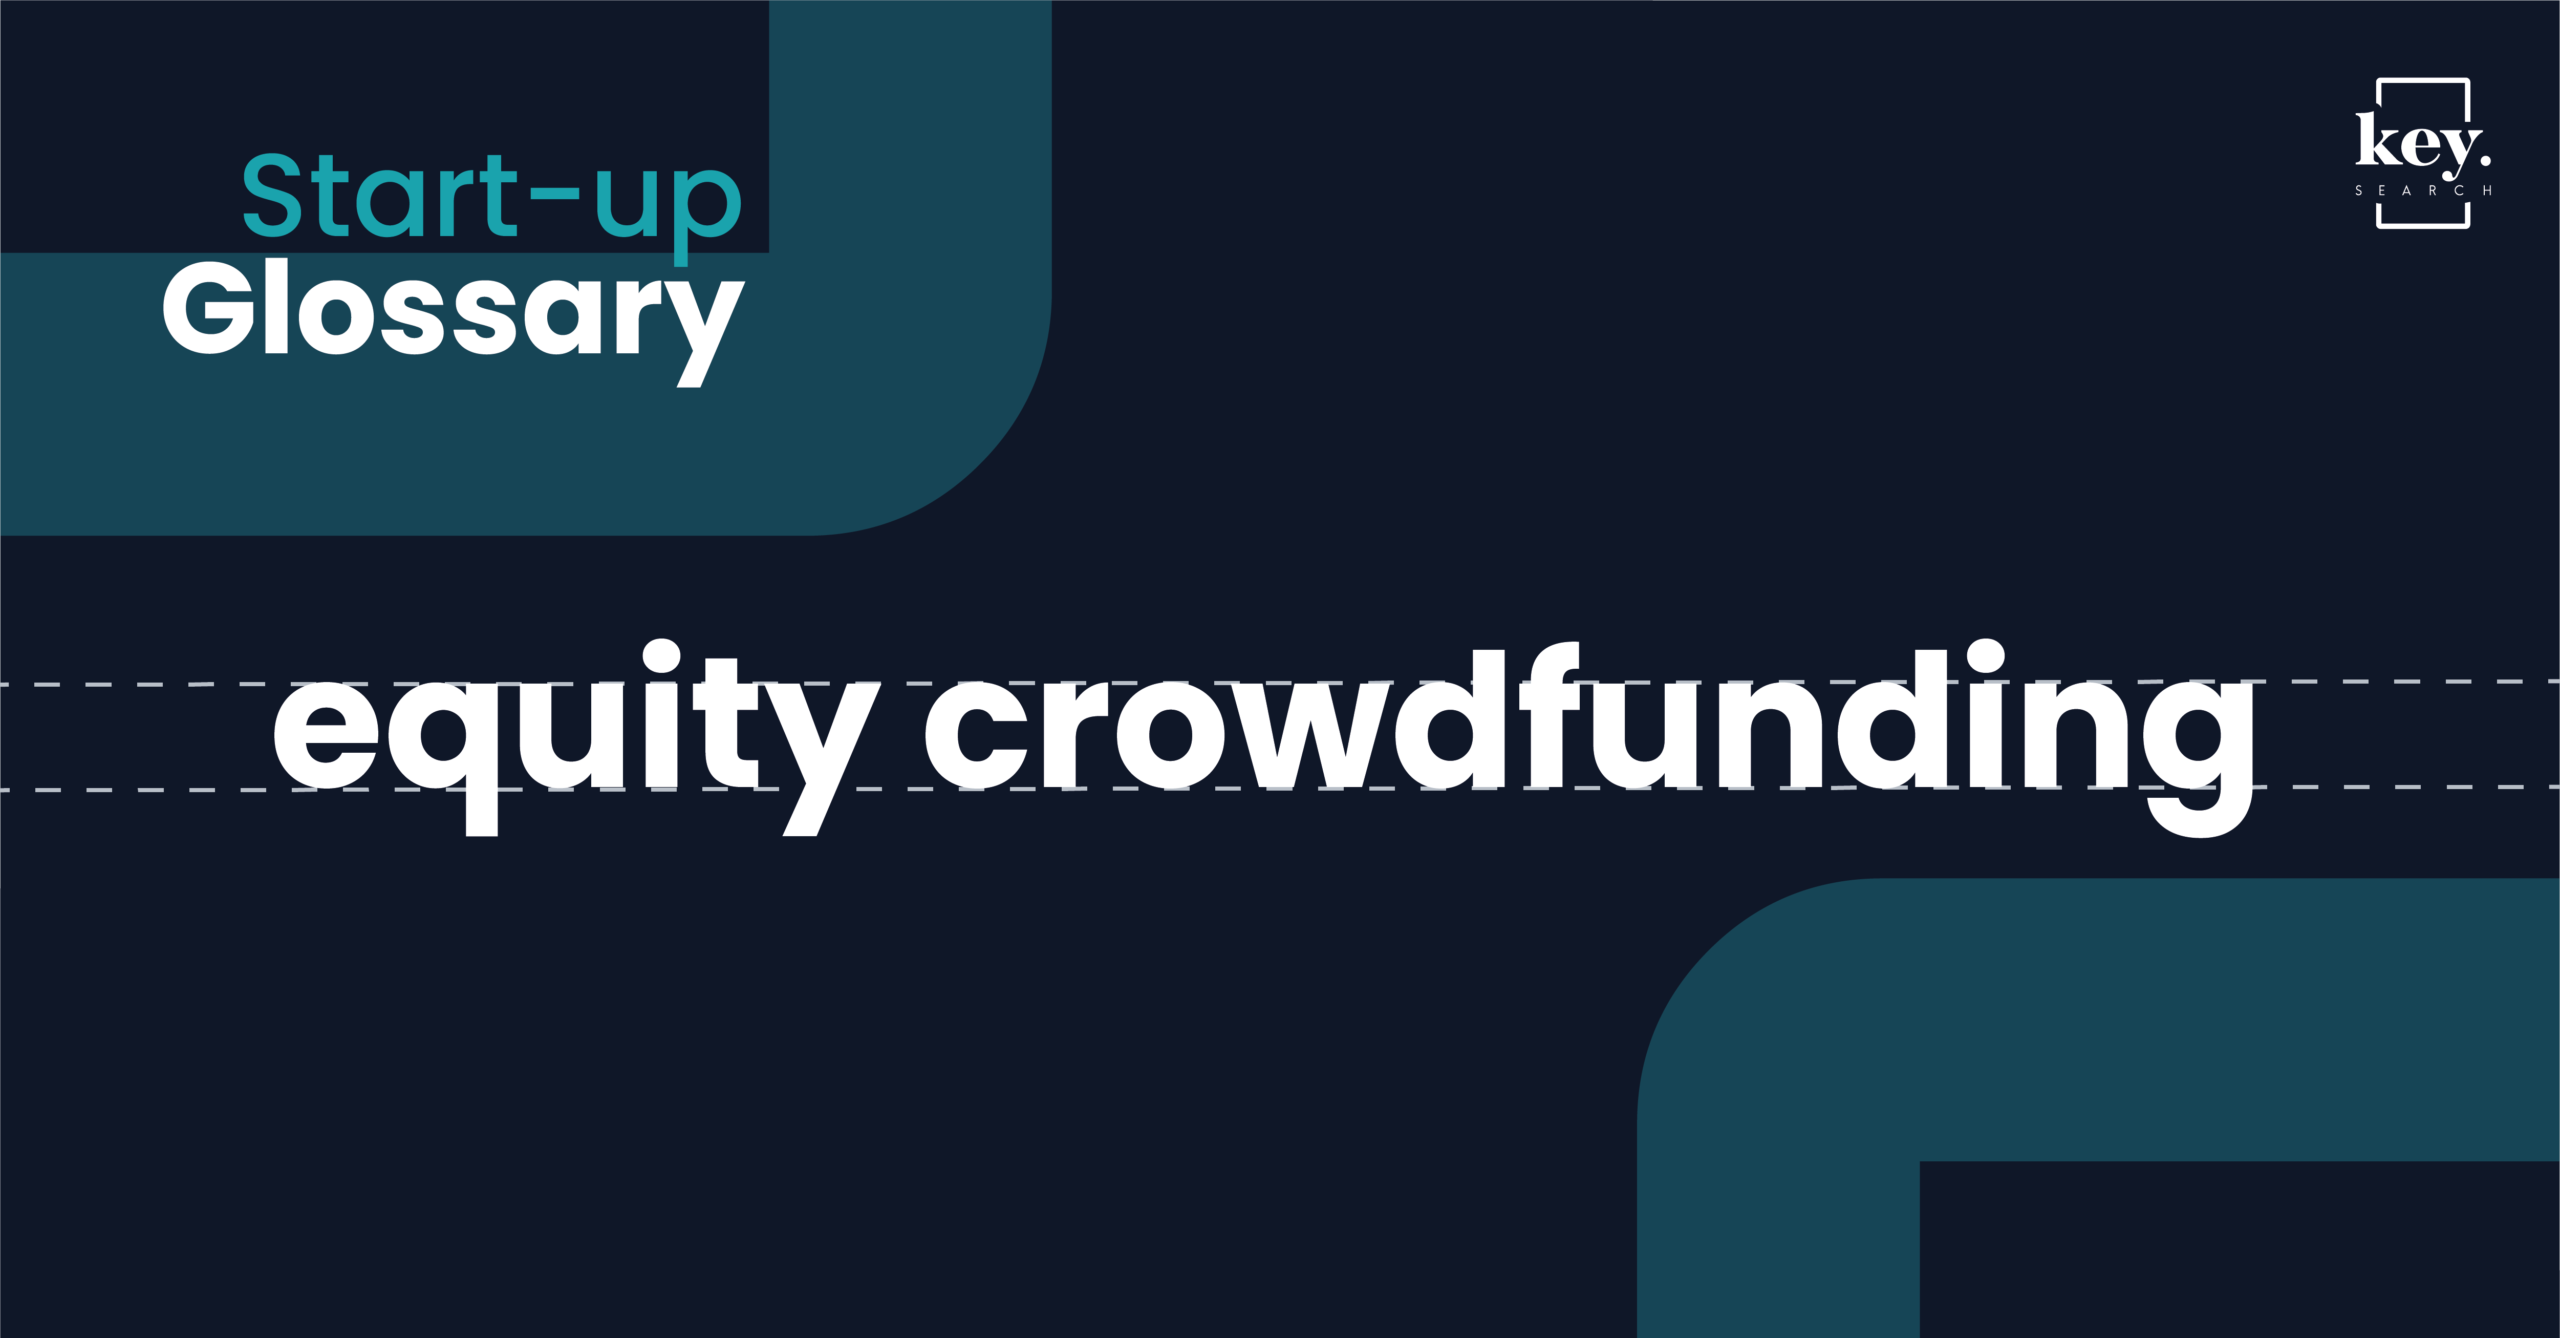 Start-up Glossary_Equity crowdfunding